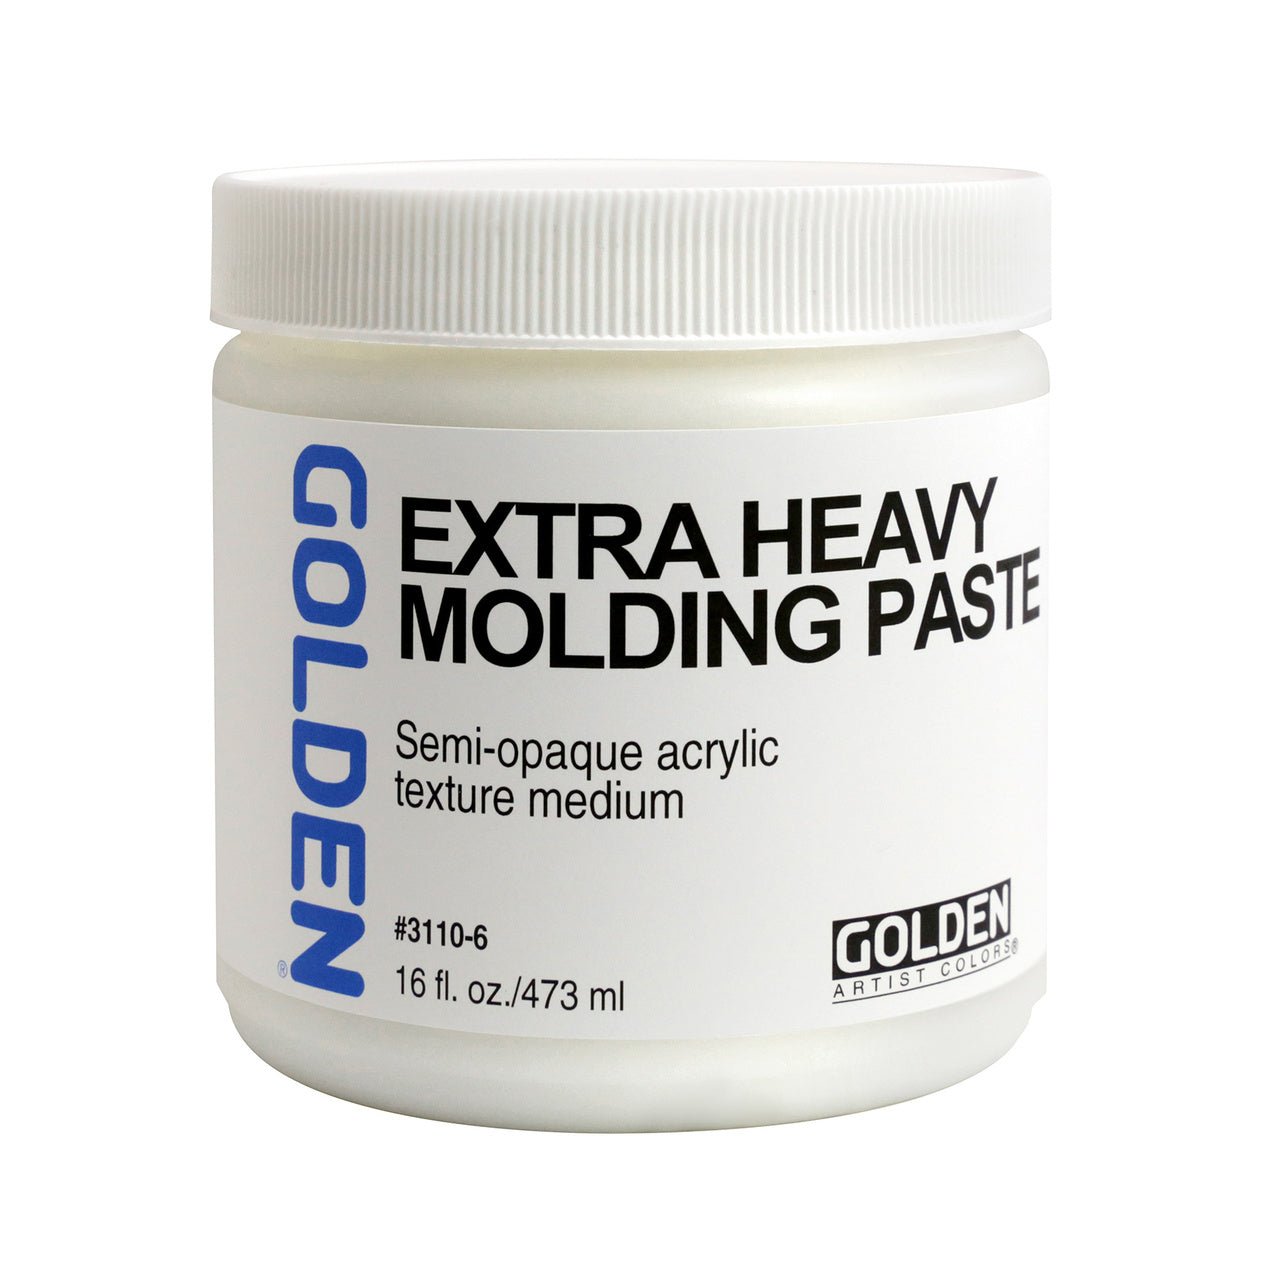 Golden Extra Heavy Molding Paste 16 oz - merriartist.com